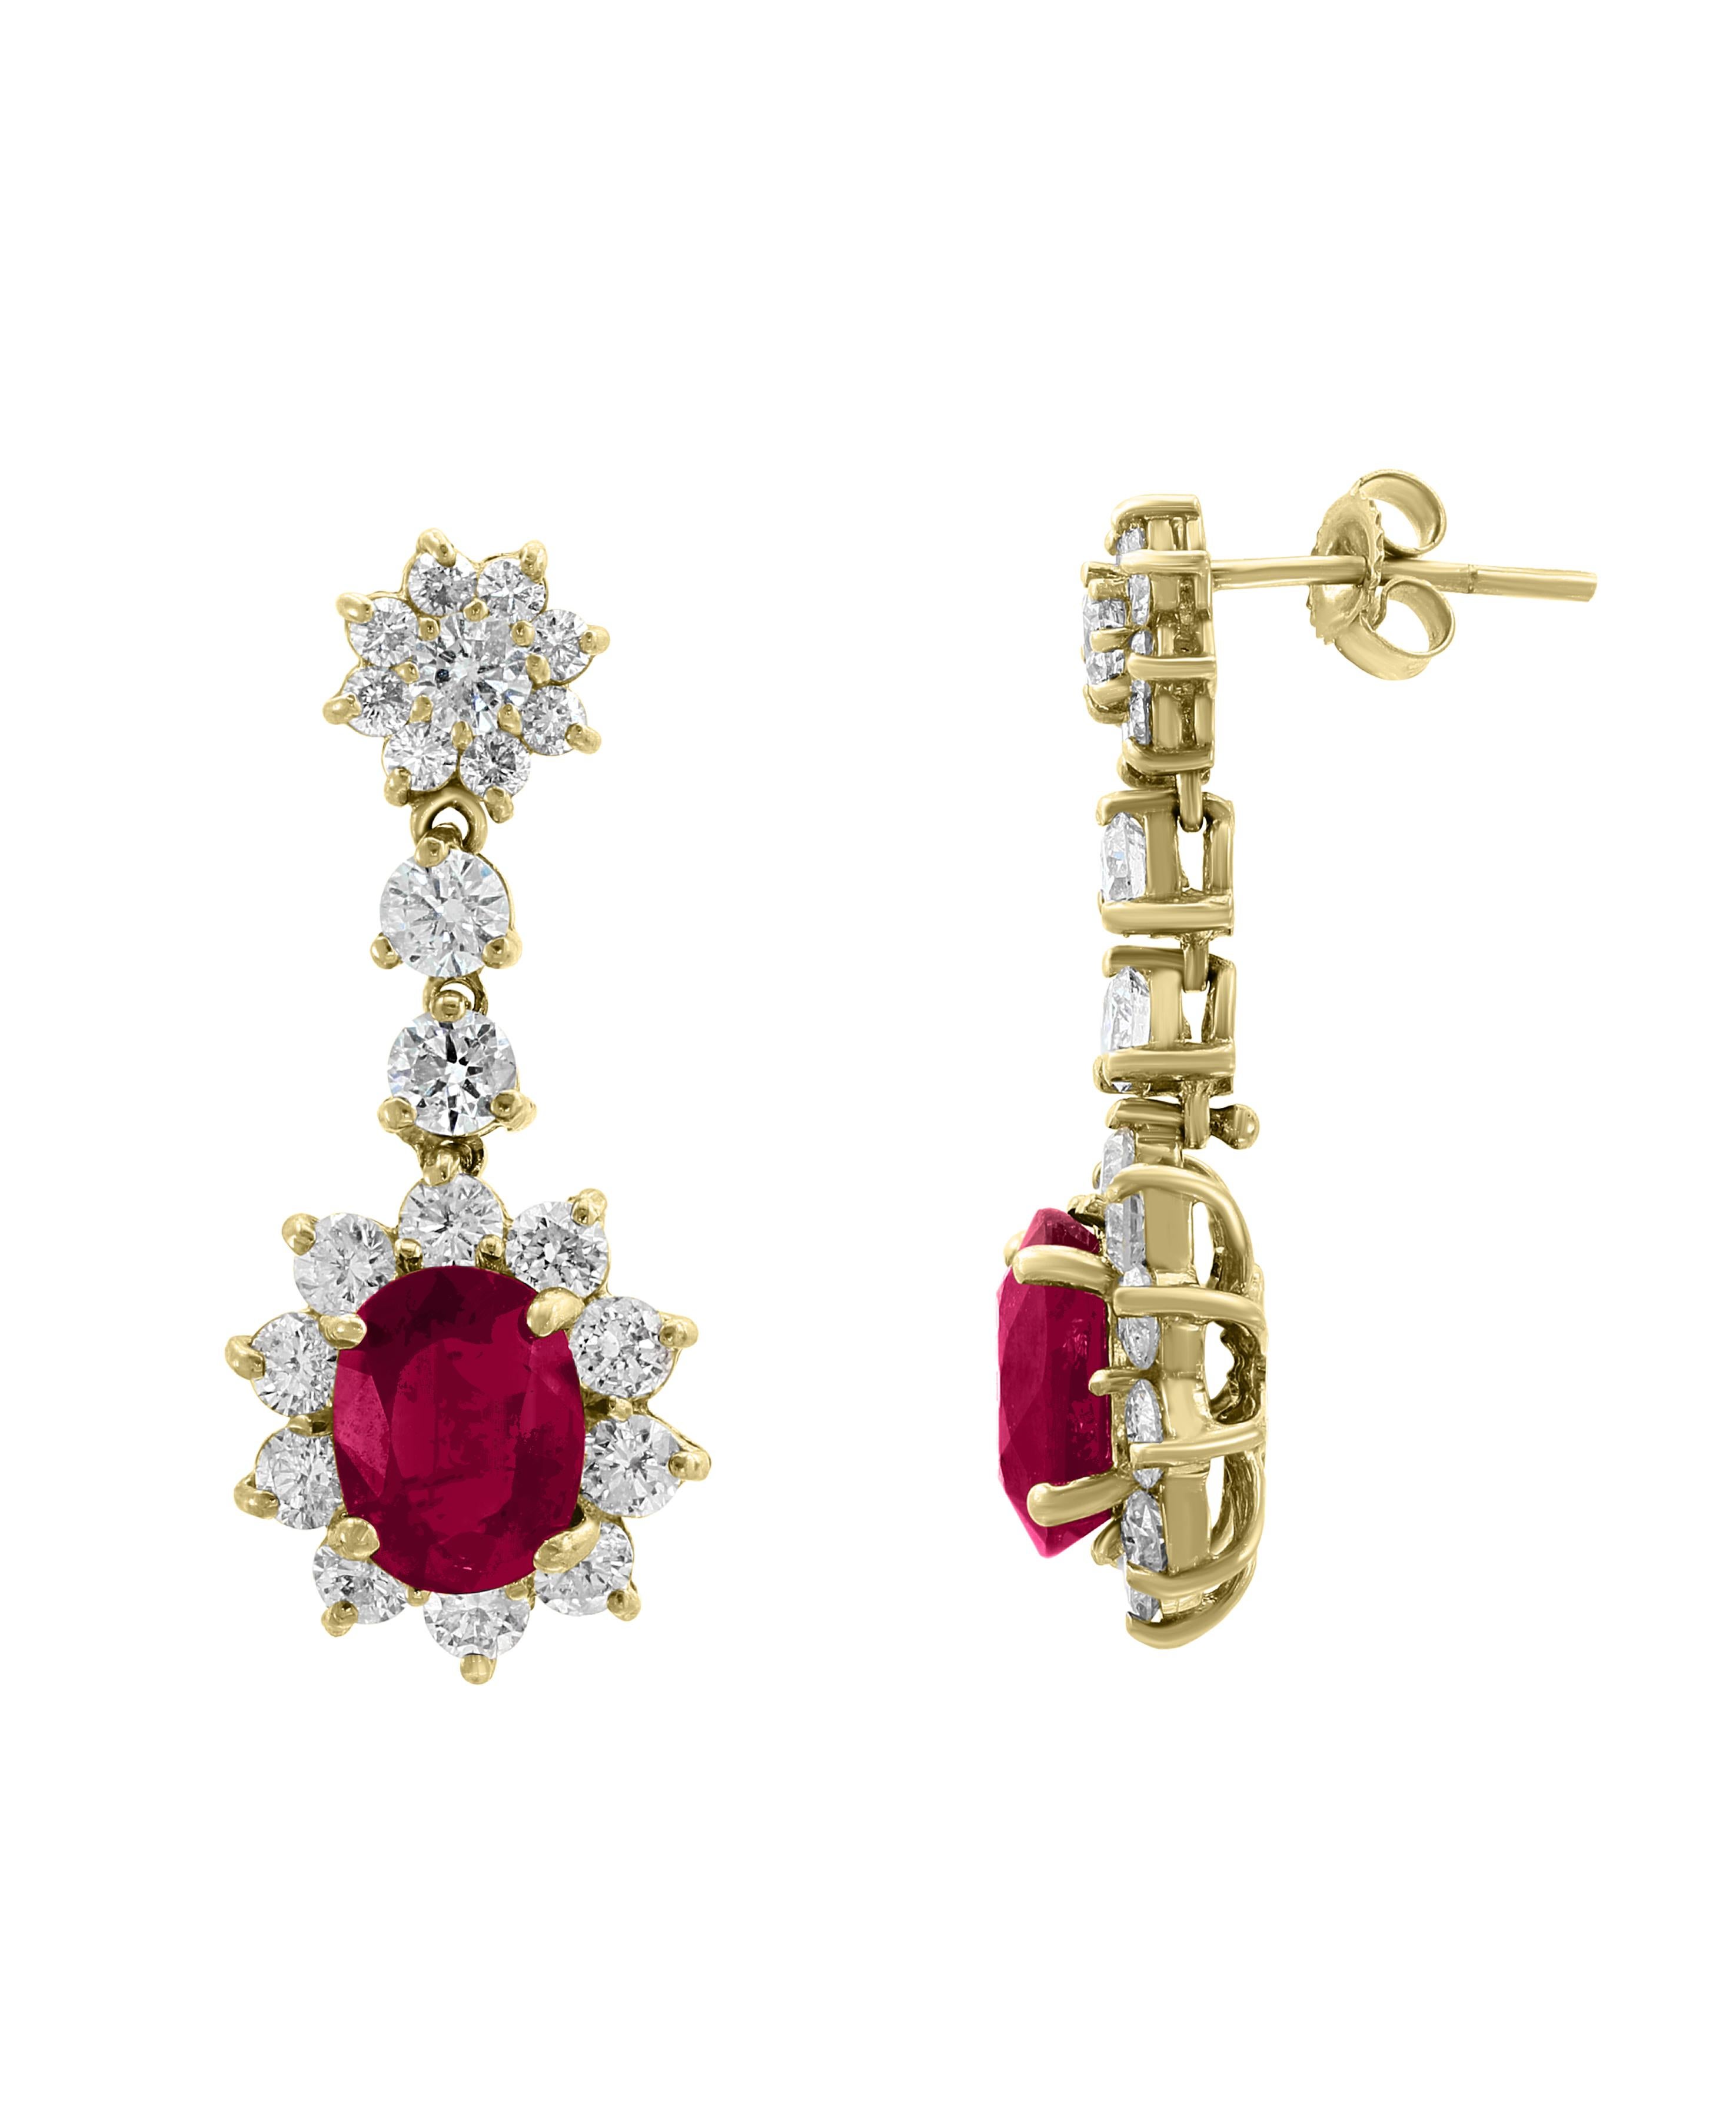 5.5 Carat Ruby and 5 Carat Diamond Hanging or Chandelier Earrings 18 Karat Gold 1